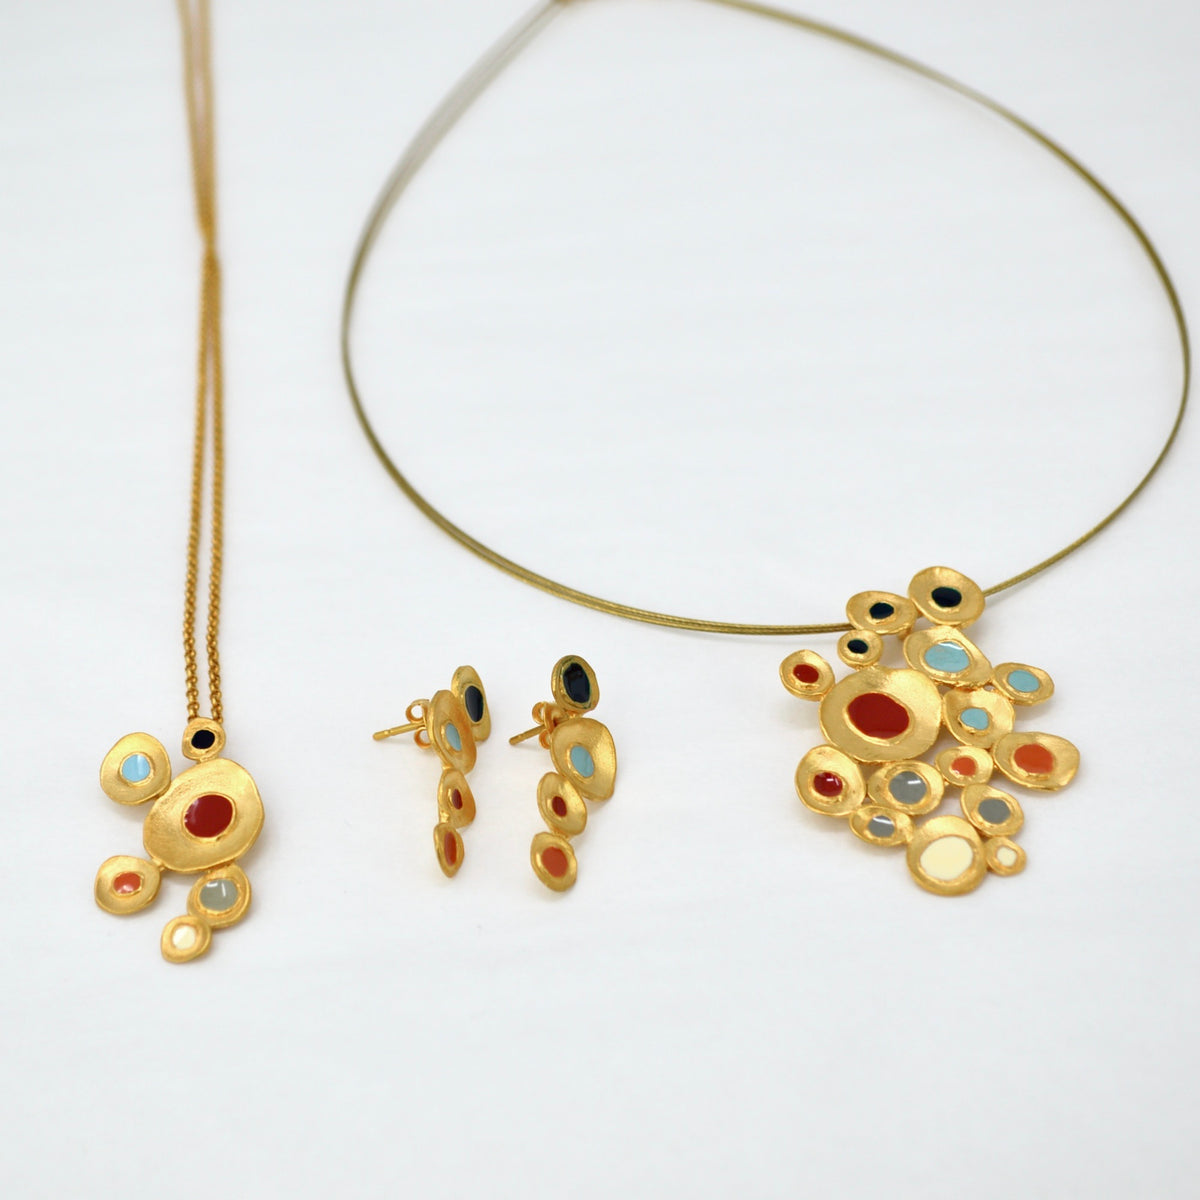 Favorita Colors Pendant Necklace, Made in Spain - My Italian Decor